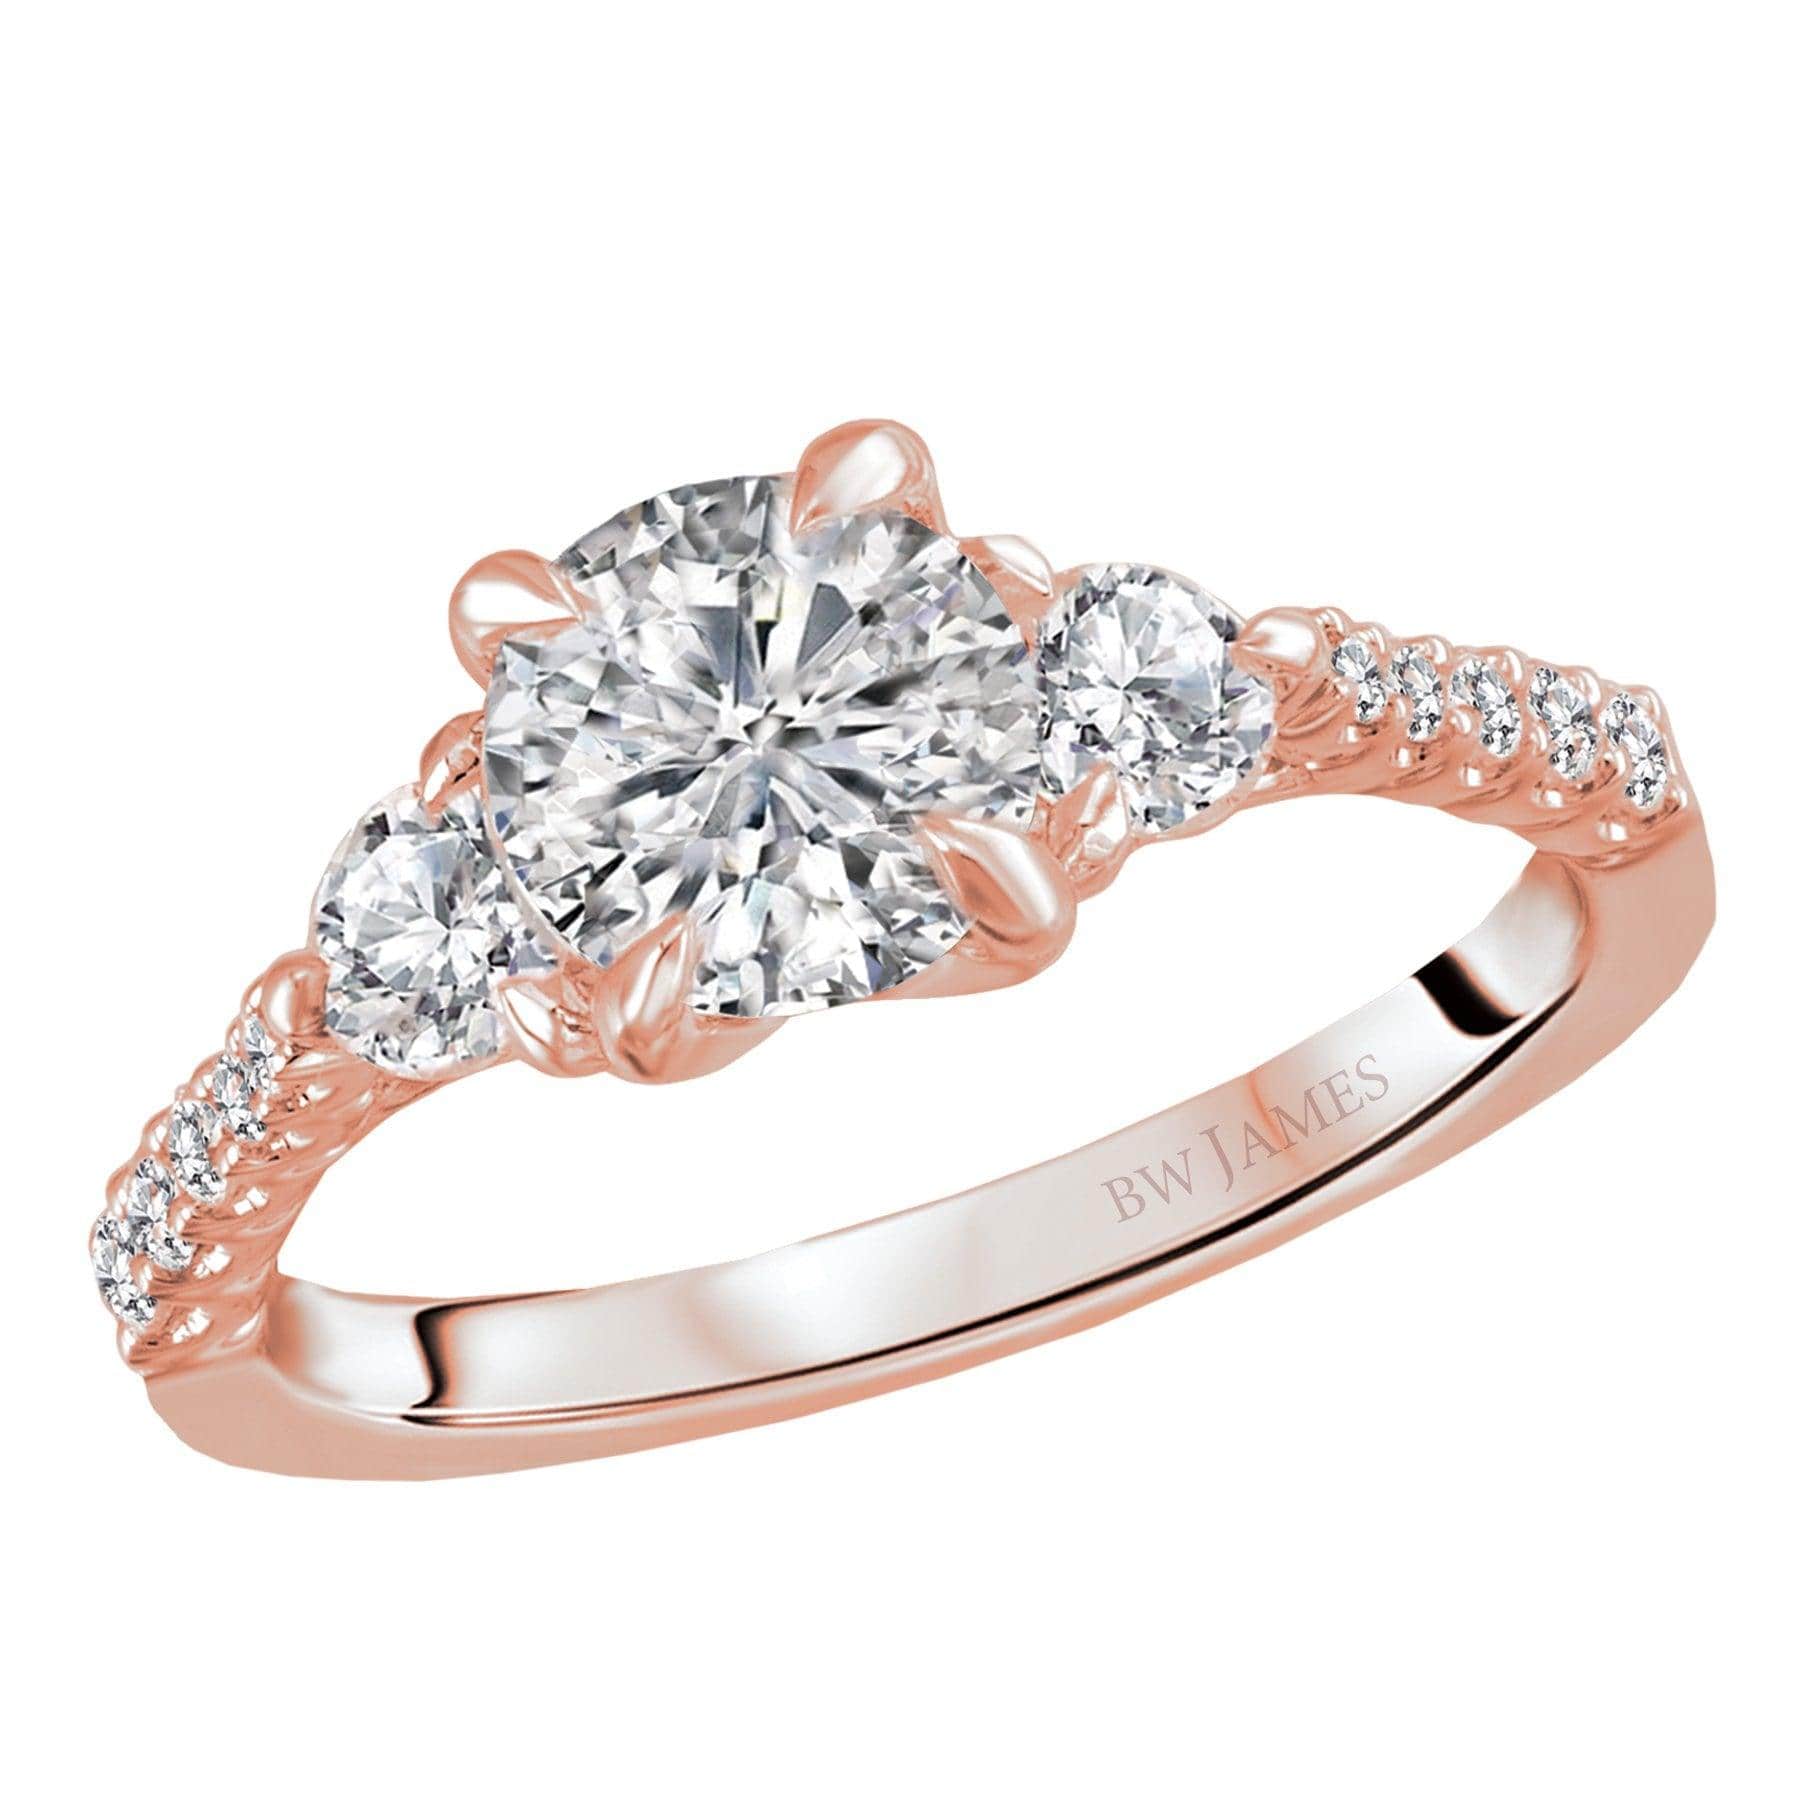 BW JAMES Engagement Rings "The Raleigh" Three Stone Semi-Mount Diamond Ring